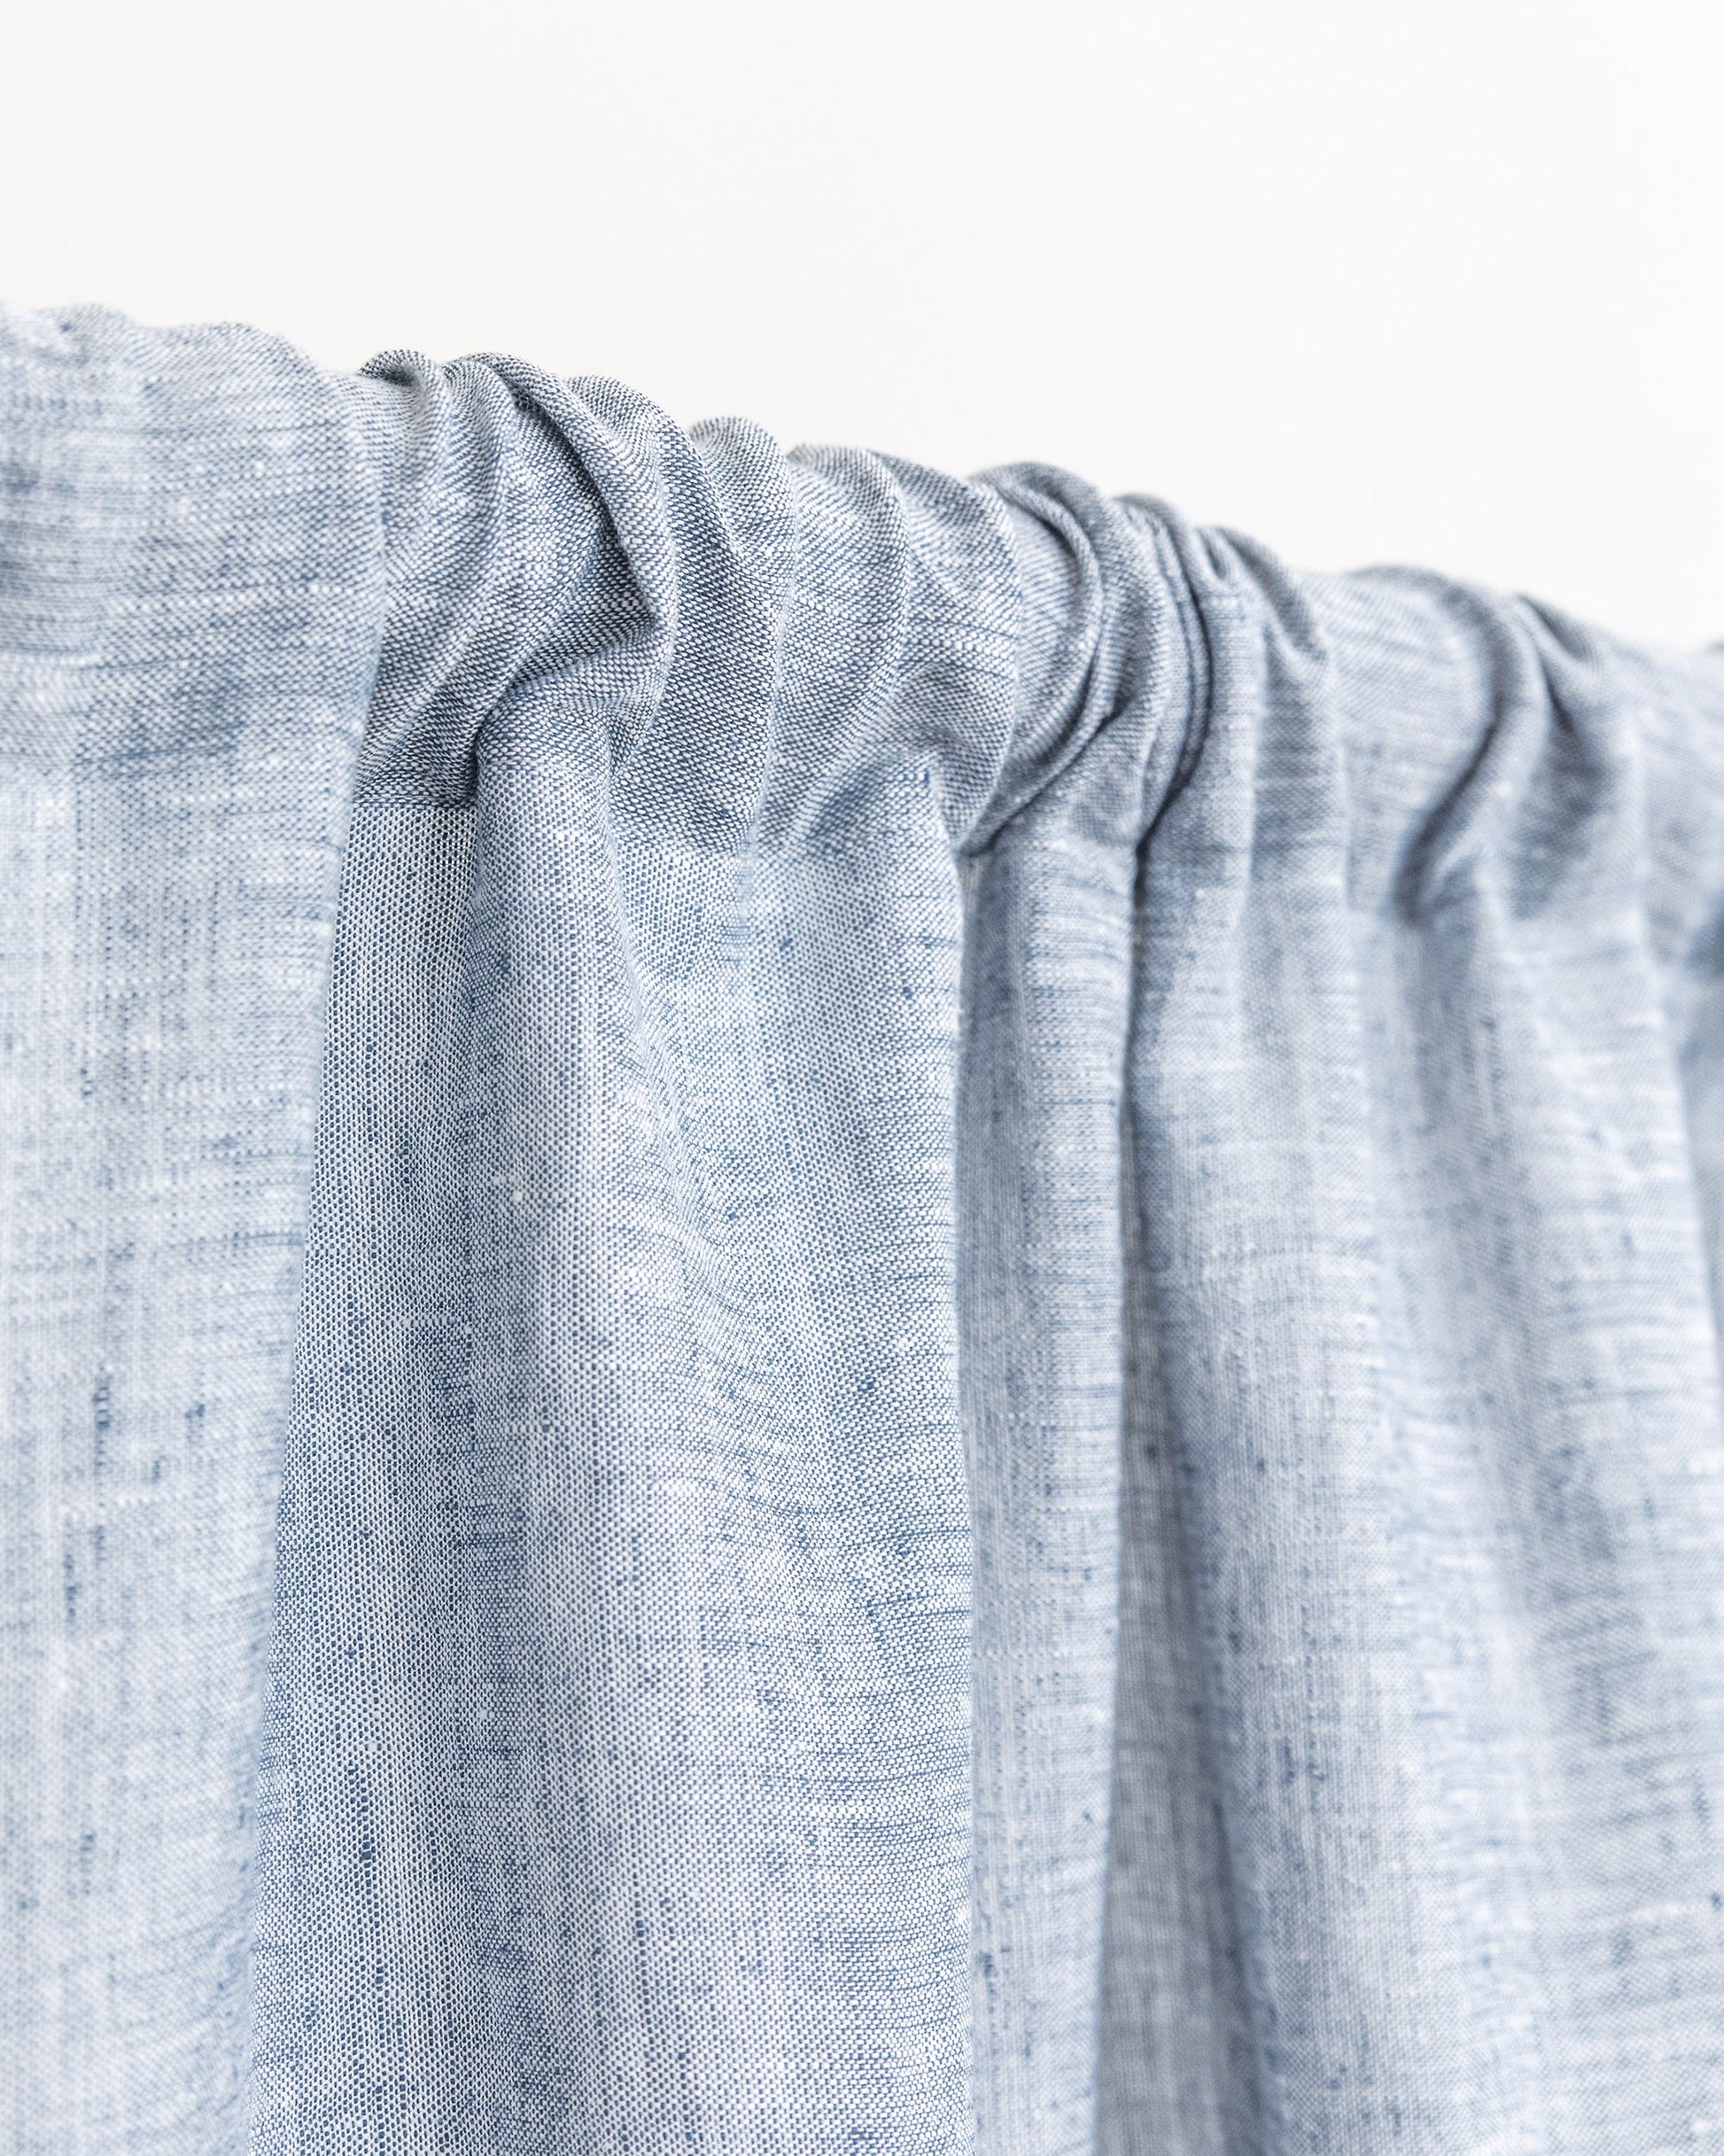 Rod pocket linen curtain panel (1 pcs) in Blue melange - MagicLinen